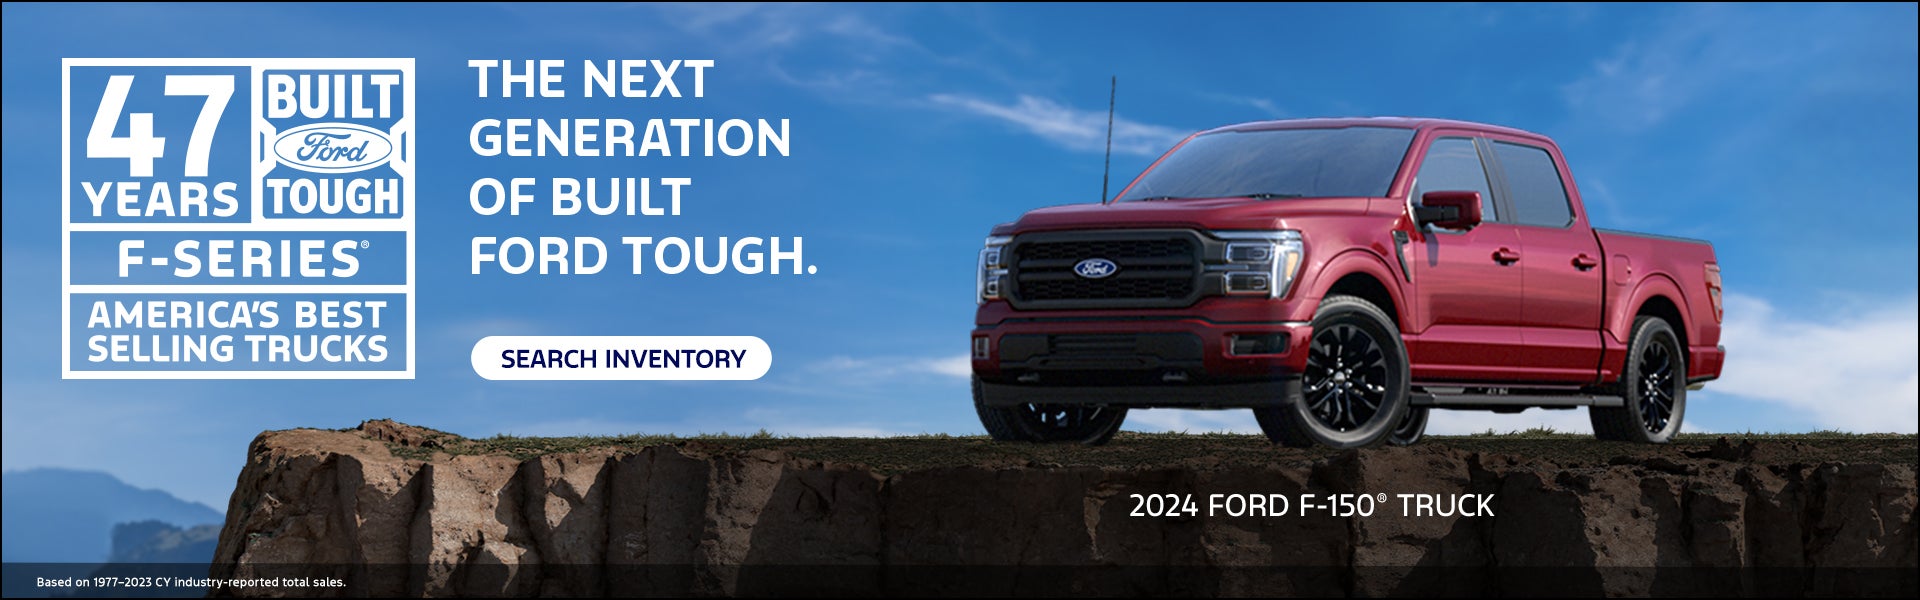 Ford Trucks America's Best Selling - F-150 